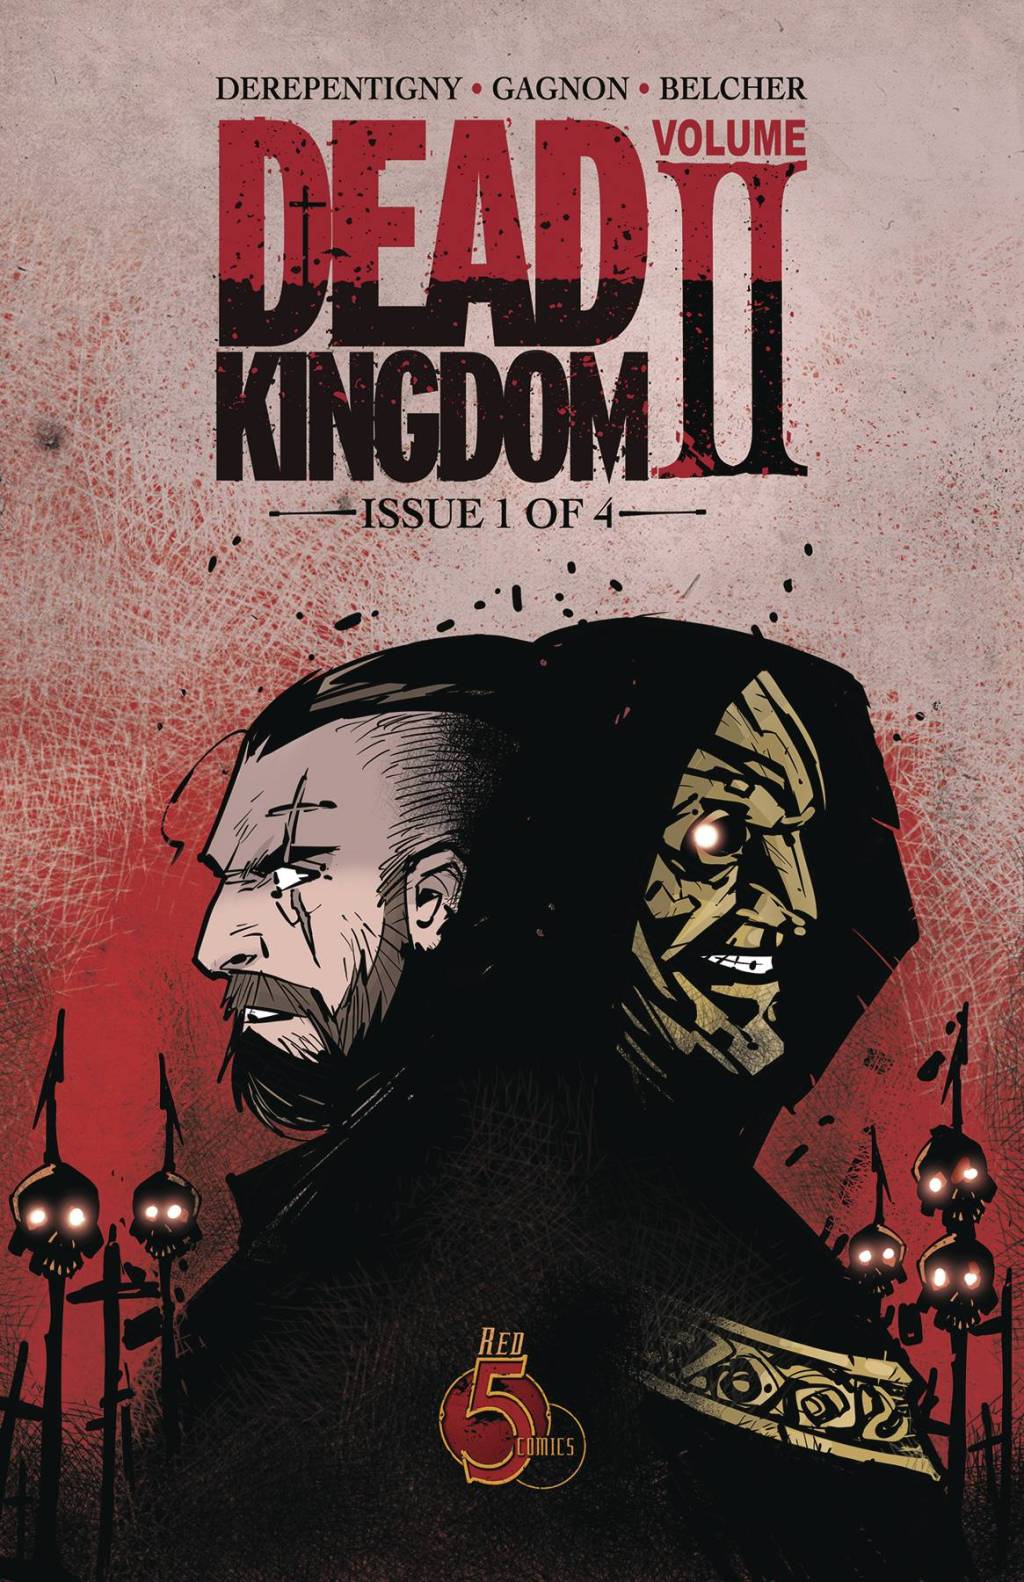 Dead Kingdom Volume 2 #1 Review